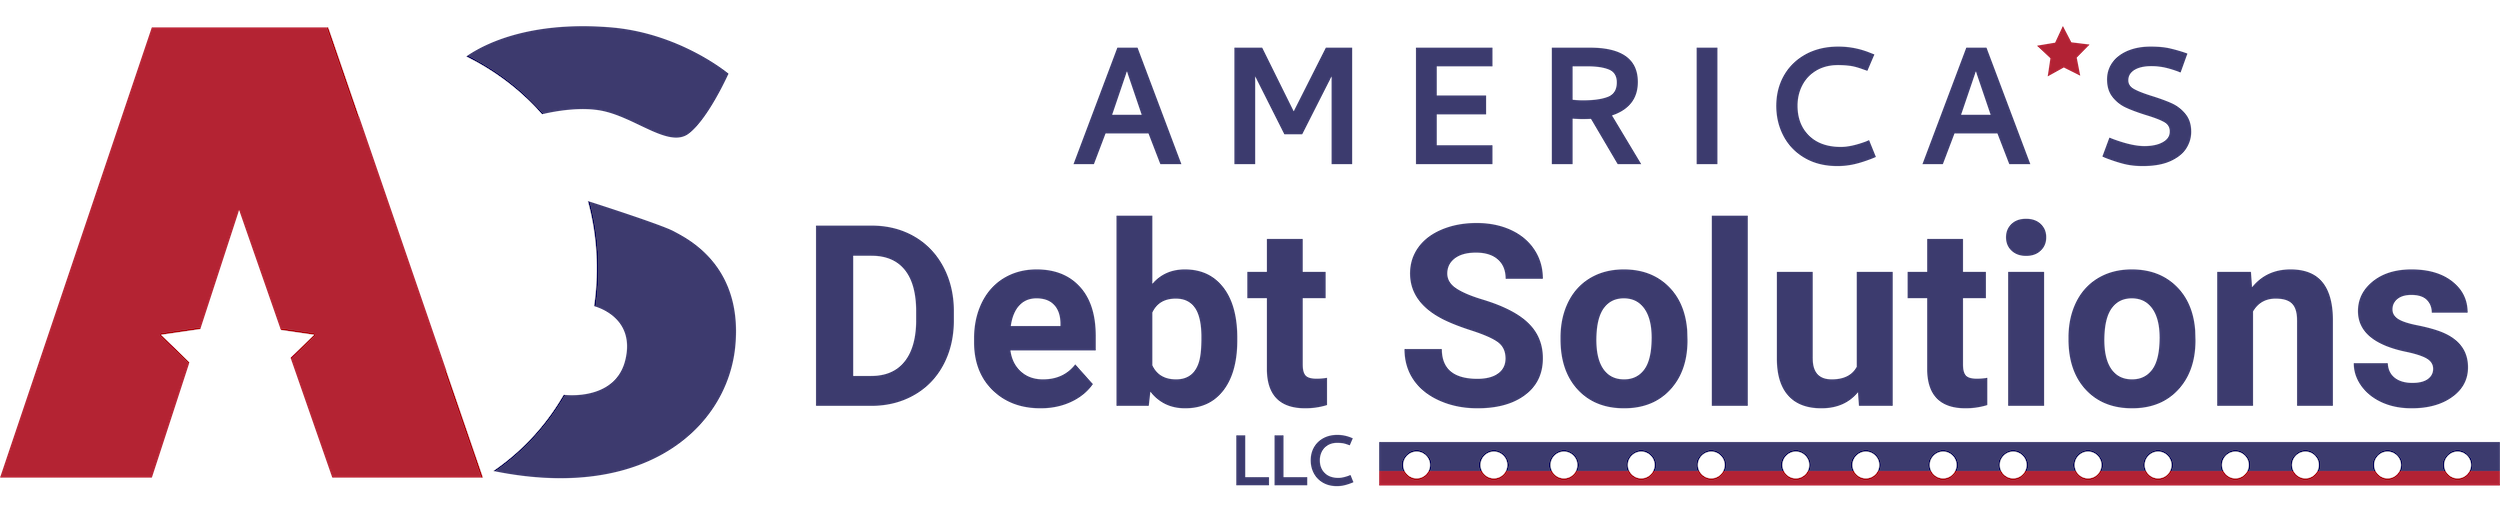 America's Debt Solutions LLC